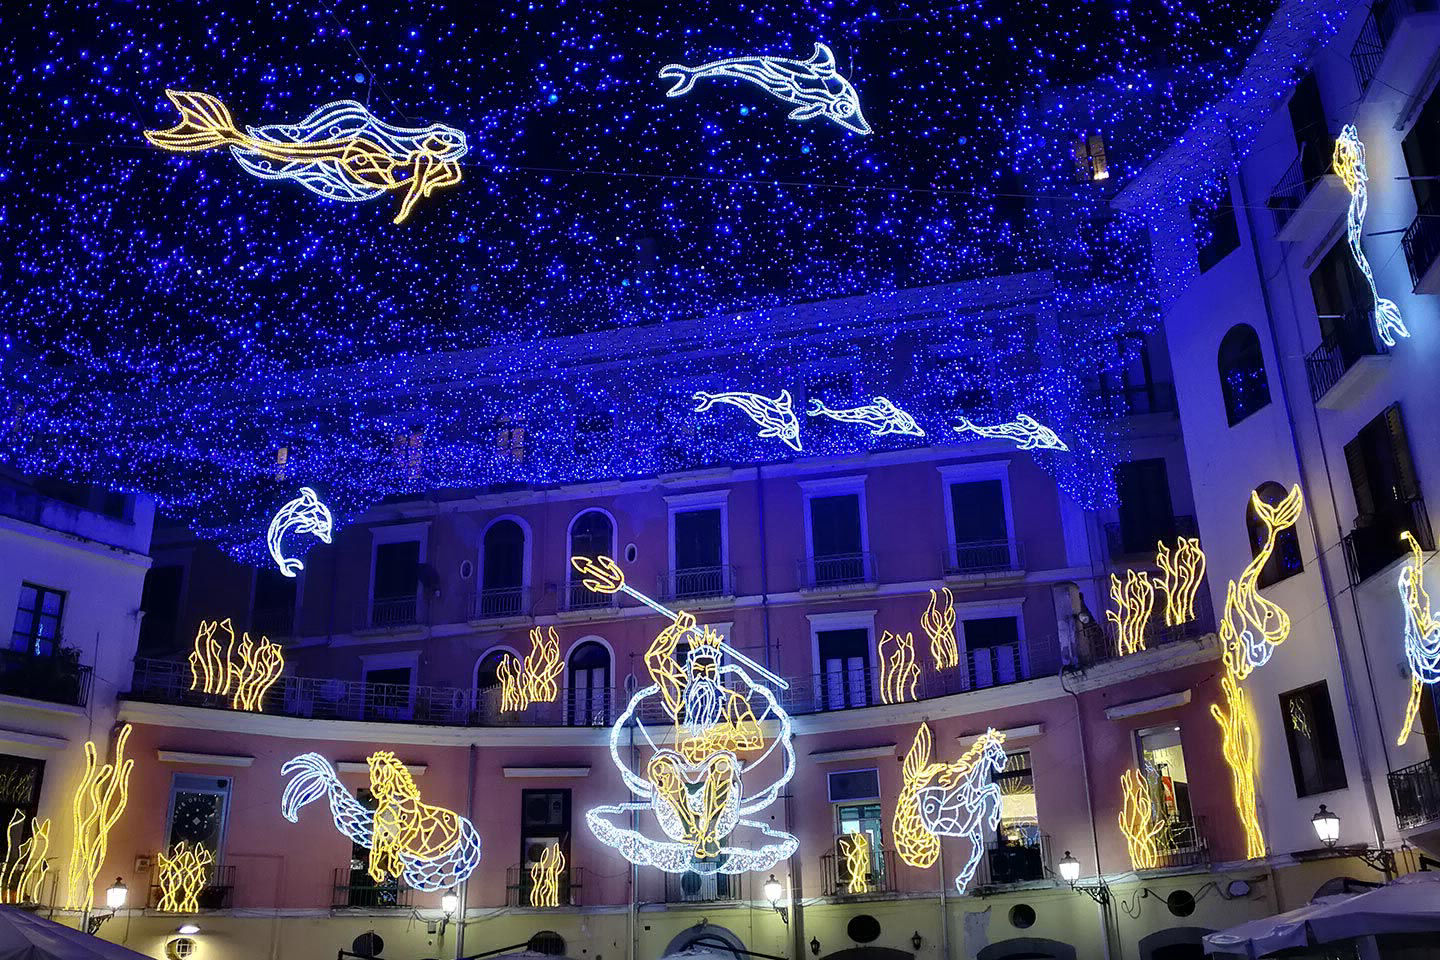  artist's lights in Salerno